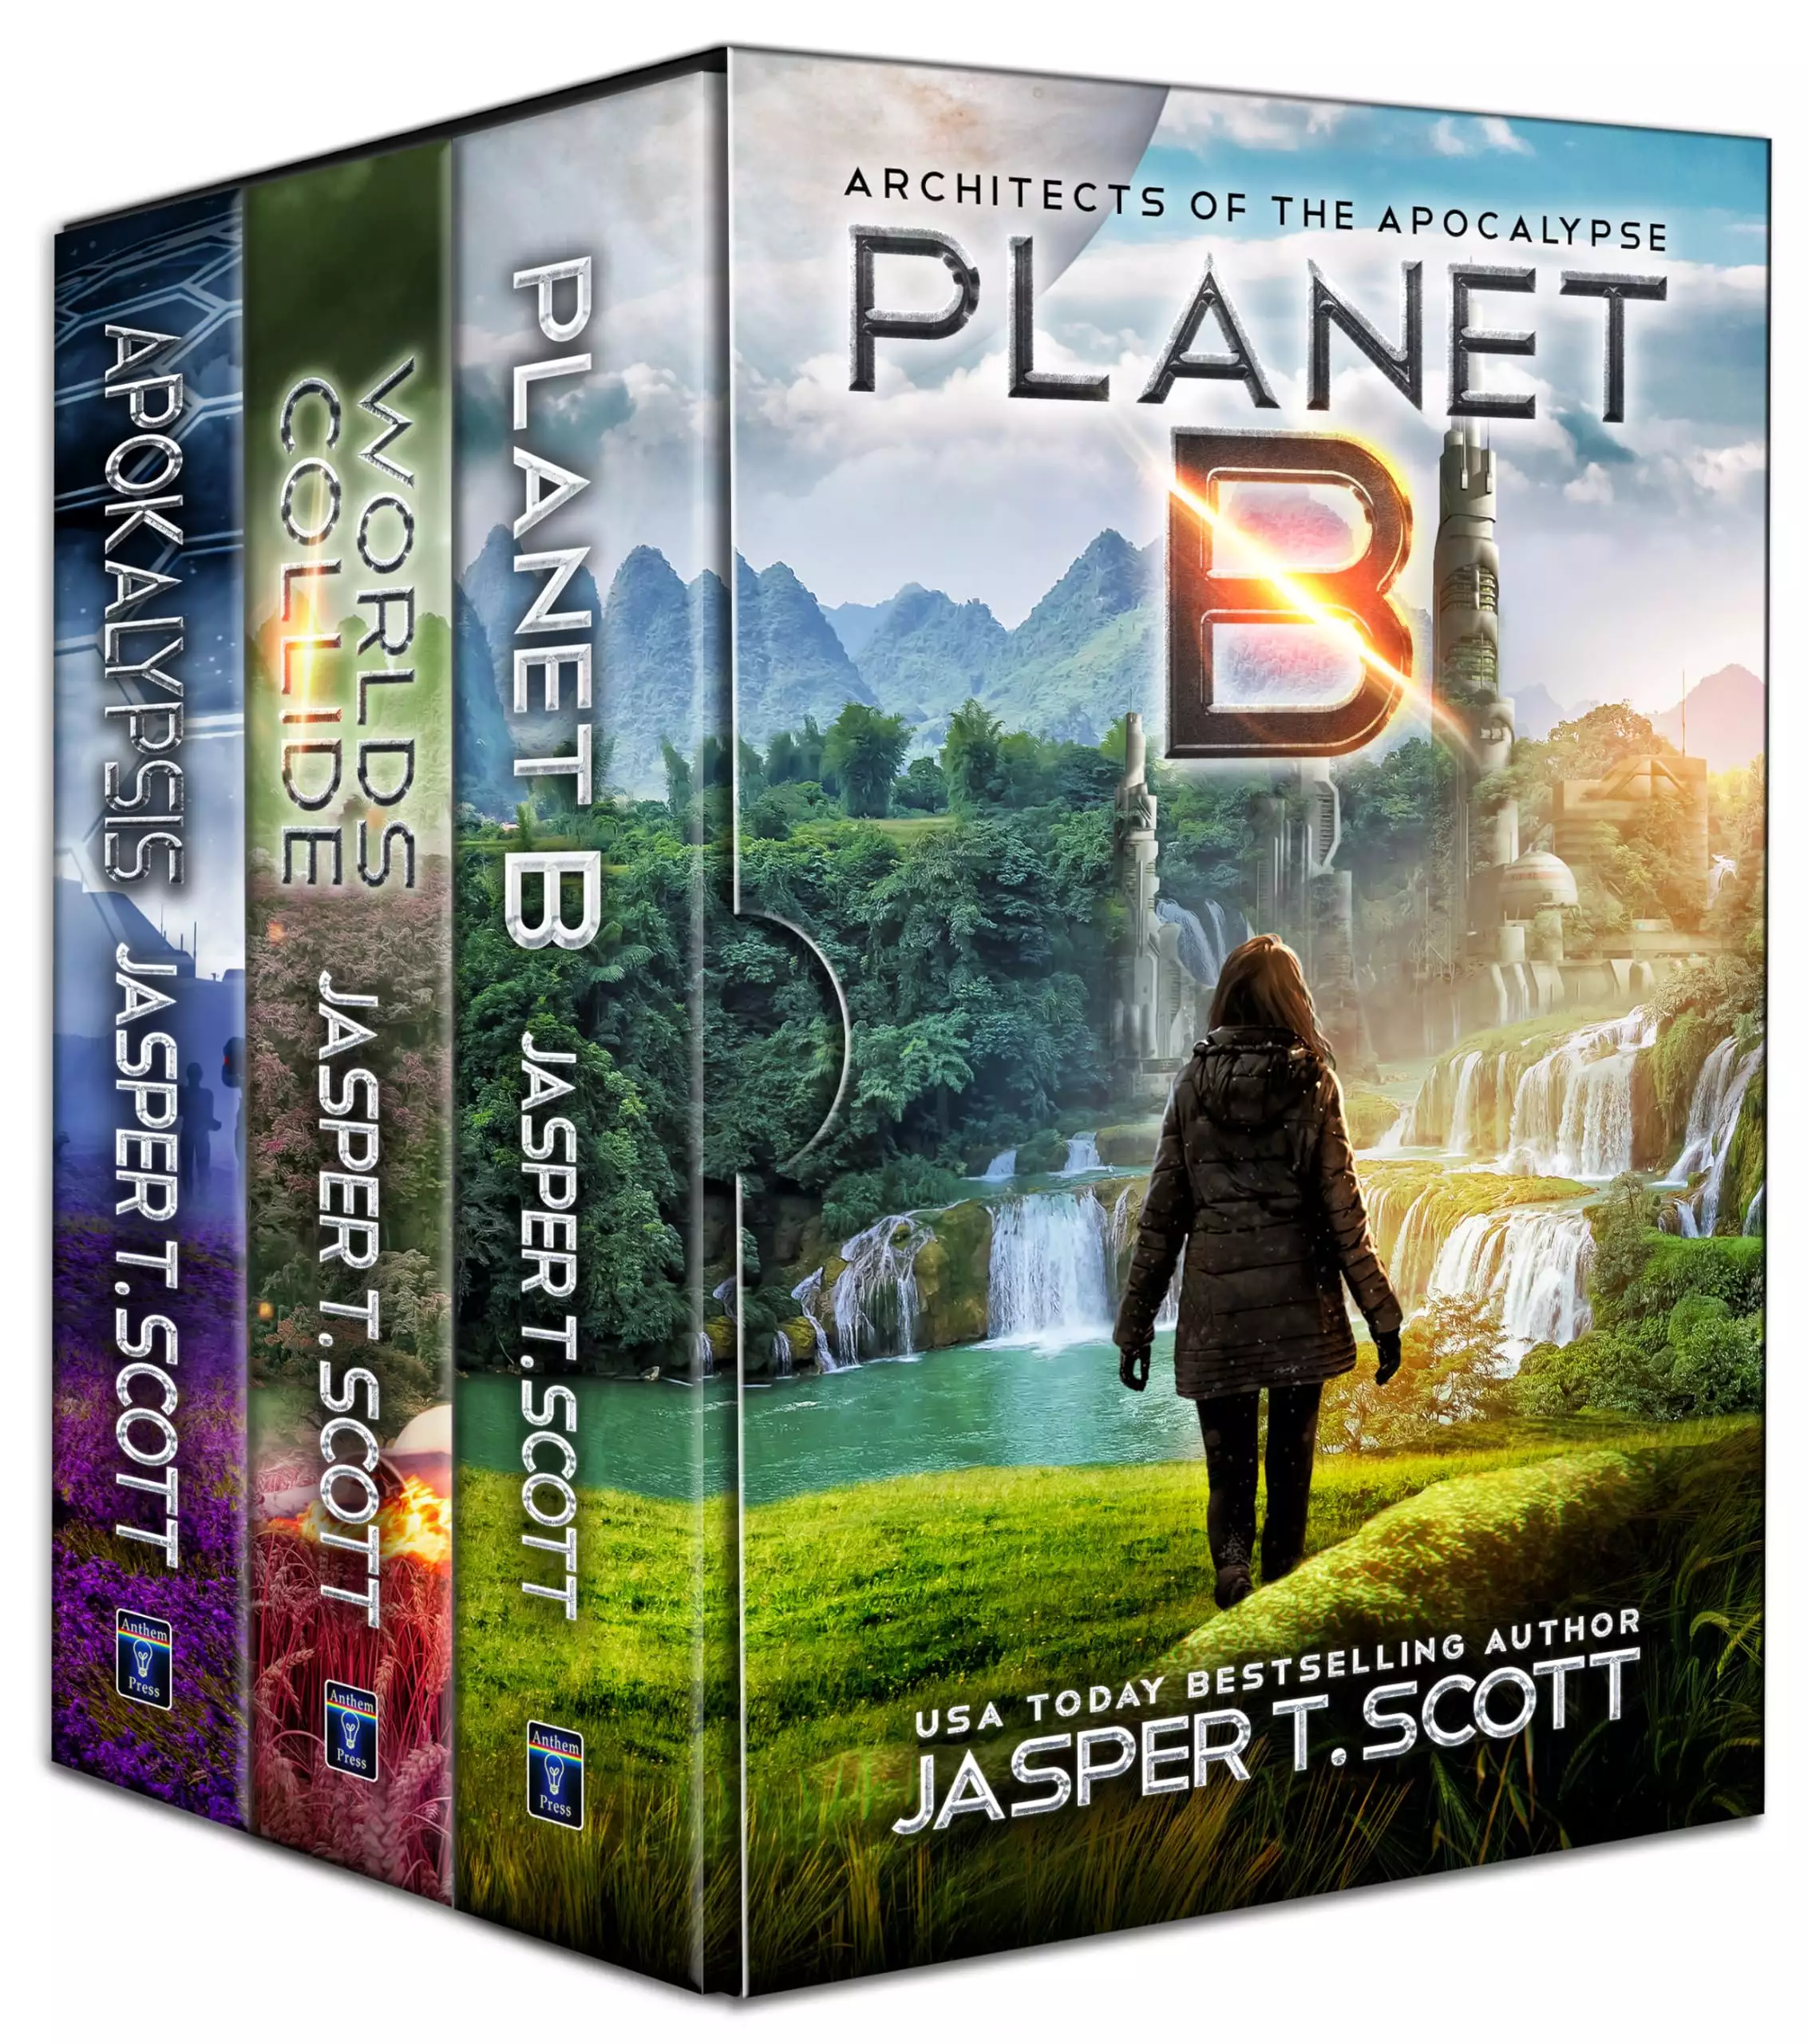 Architects of the Apocalypse: The Complete Series (Books 1-3) (Jasper Scott Box Sets)